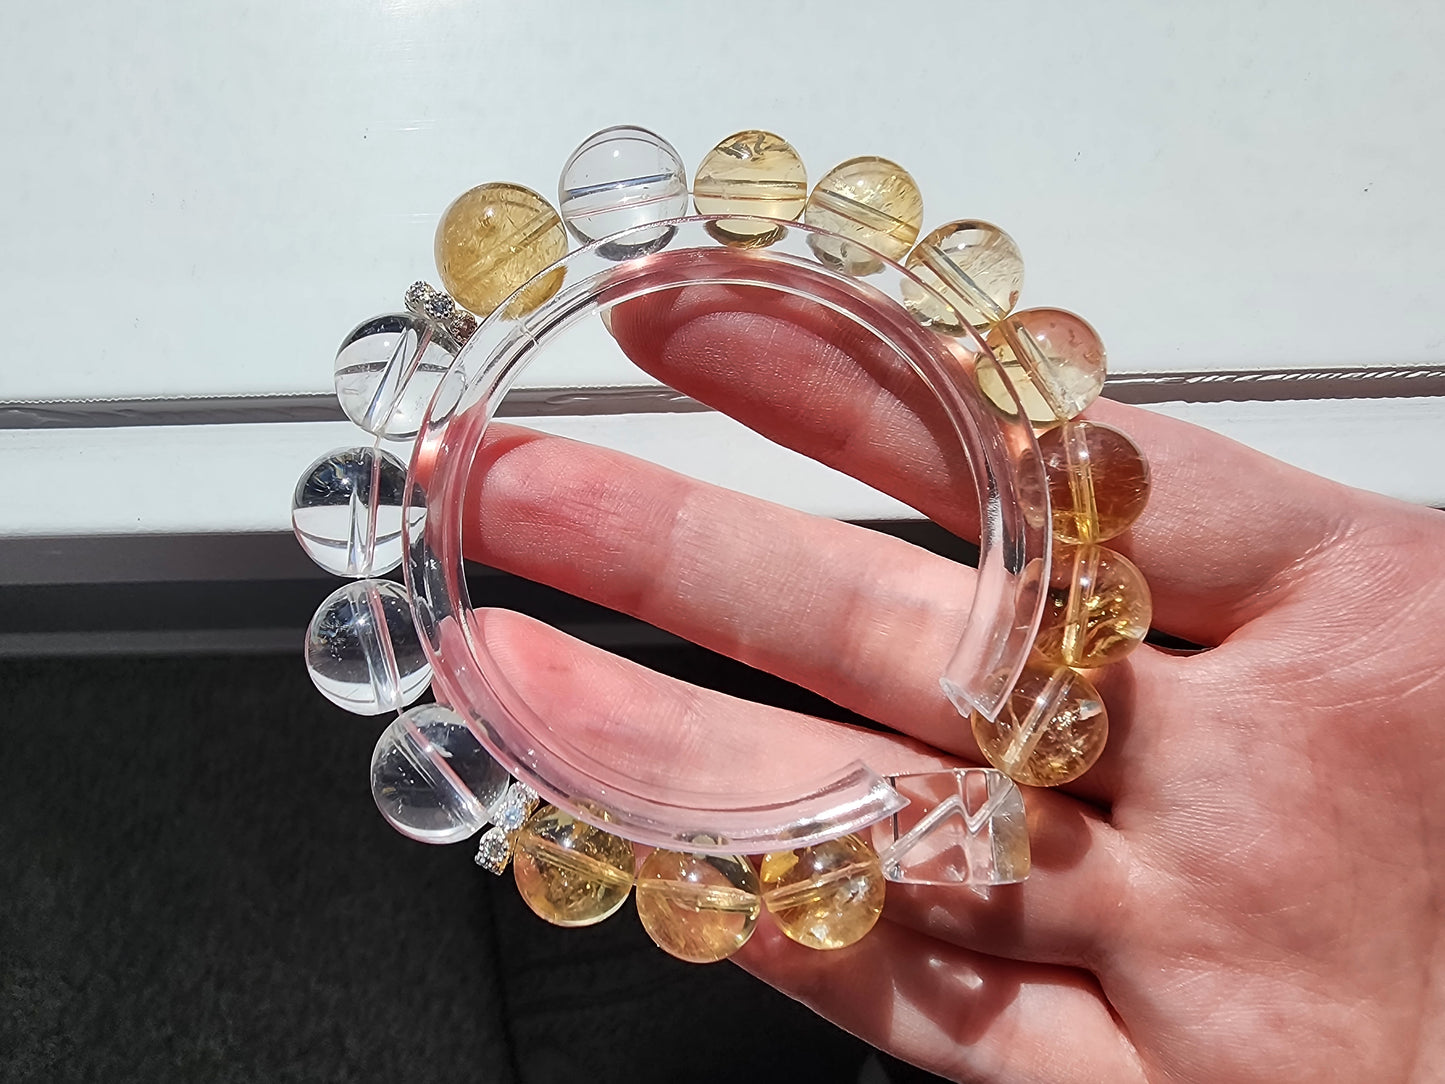 [Bracelet] 10mm Dual-Tone Yellow and Clear Quartz Bead Bracelet - Handcrafted Elegance